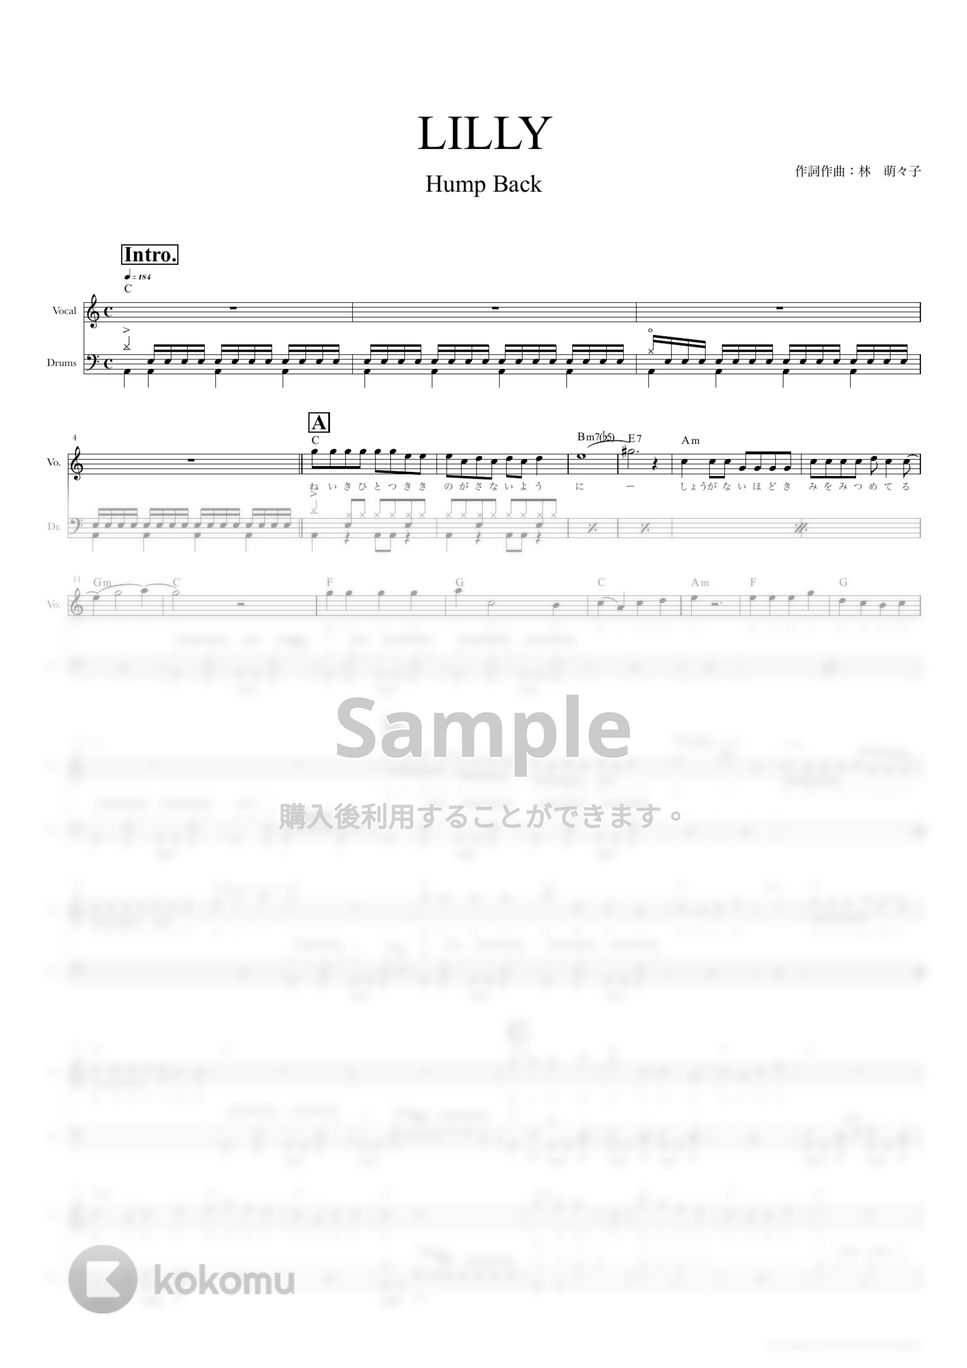 Hump Back - LILLY (ドラムスコア・歌詞・コード付き) by TRIAD GUITAR SCHOOL